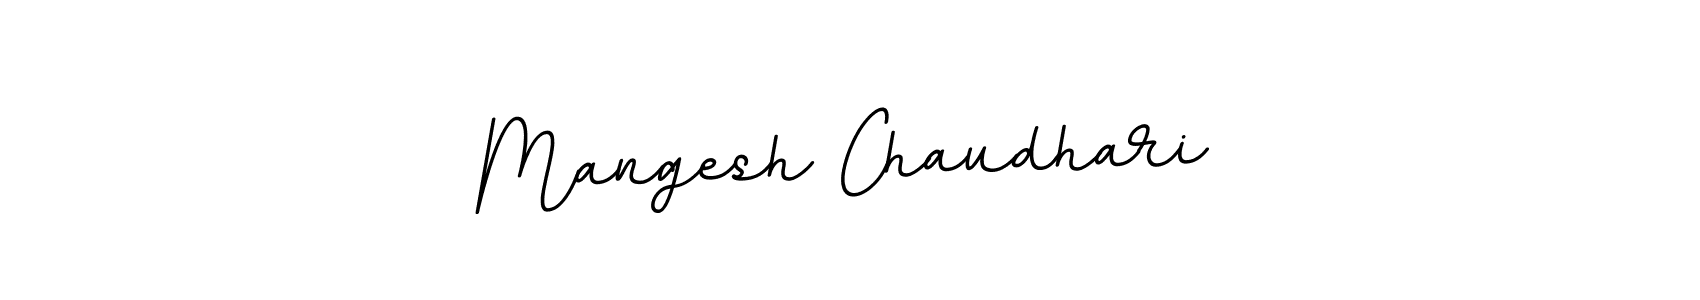 How to Draw Mangesh Chaudhari signature style? BallpointsItalic-DORy9 is a latest design signature styles for name Mangesh Chaudhari. Mangesh Chaudhari signature style 11 images and pictures png